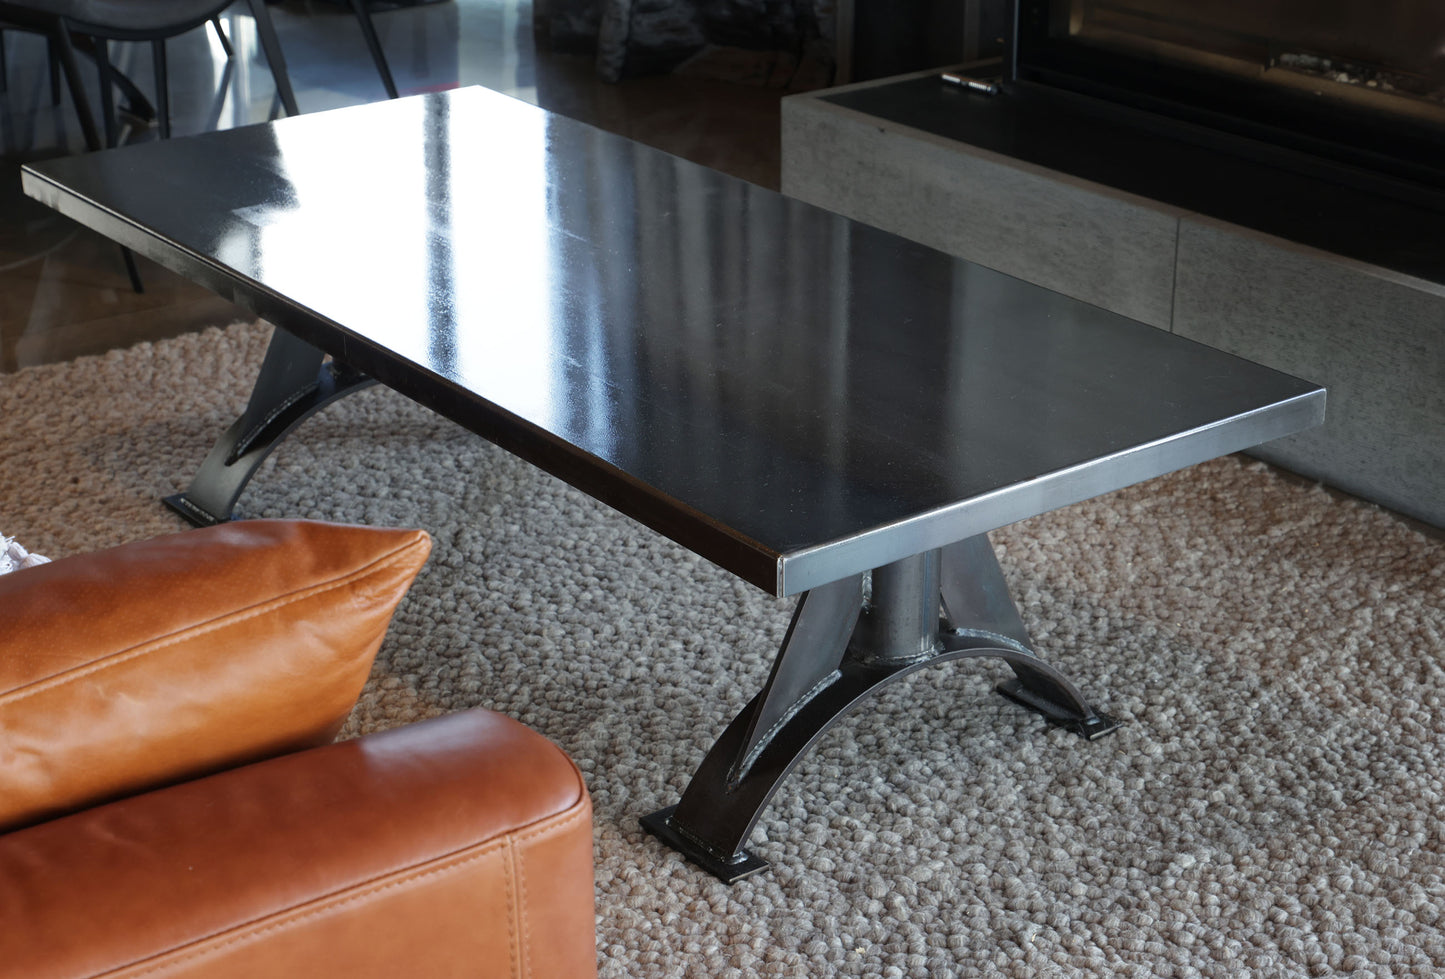 Steel coffee table